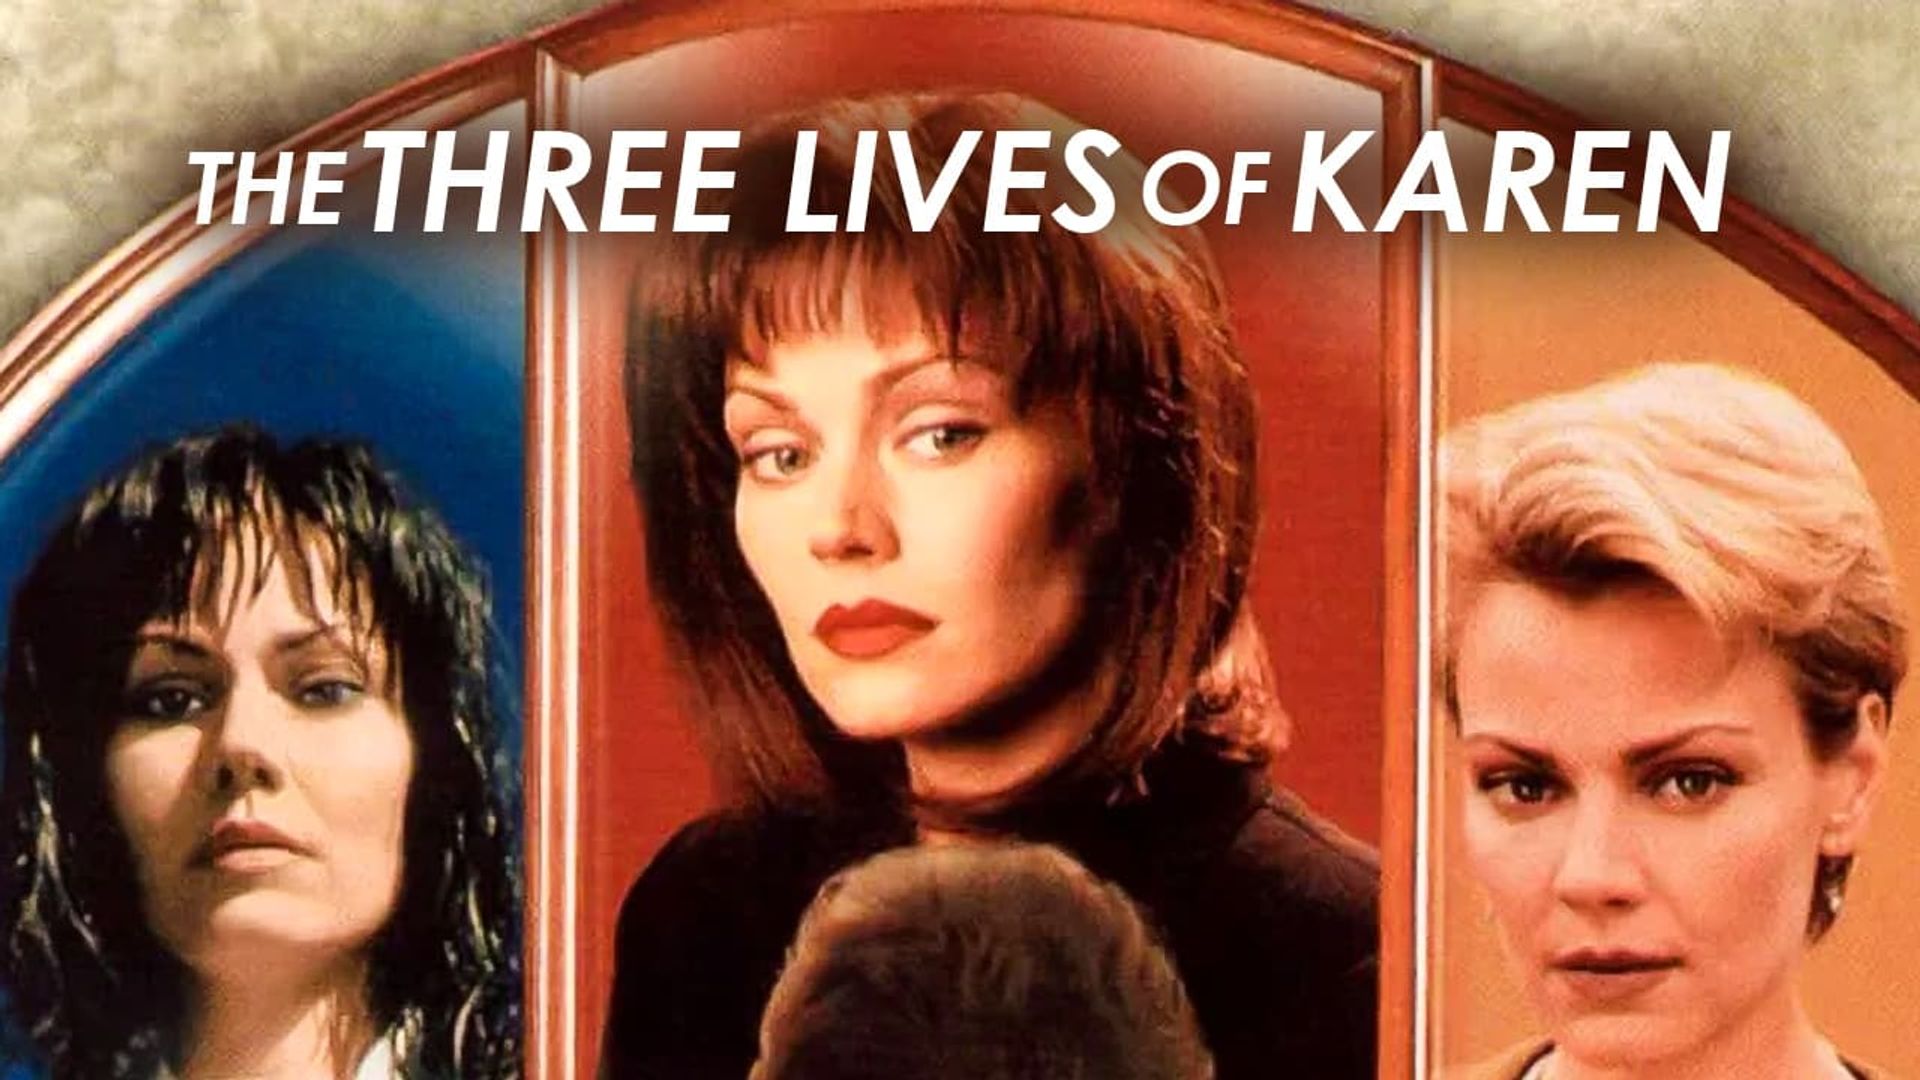 The Three Lives of Karen background